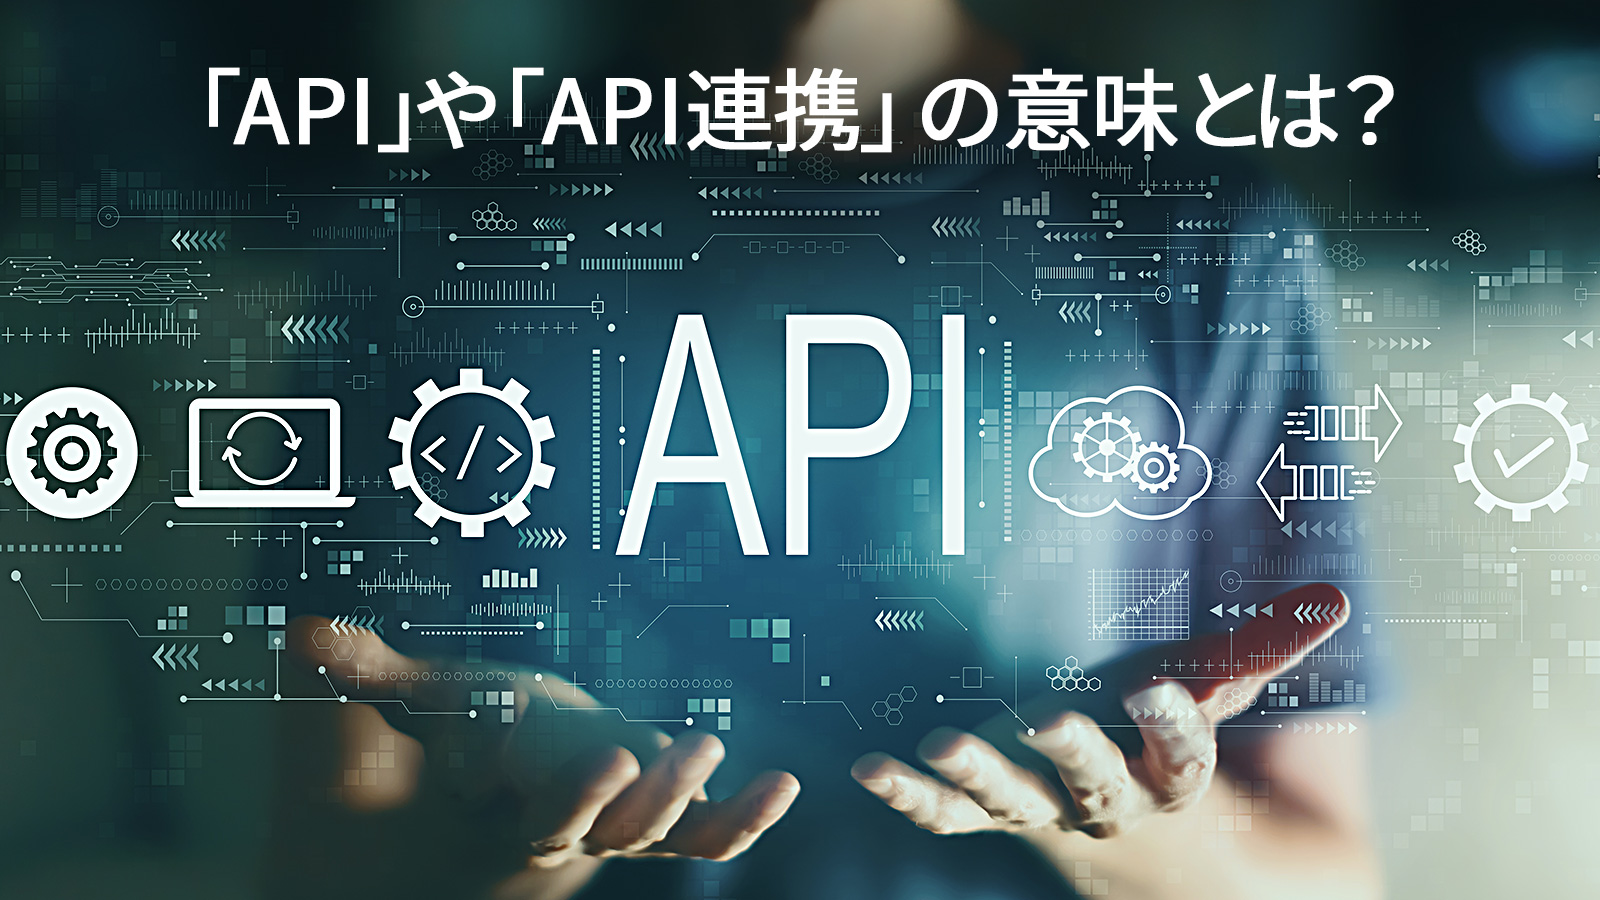 「API」や「API連携」の意味とは？出来る事・メリットなど、分かりやすく解説